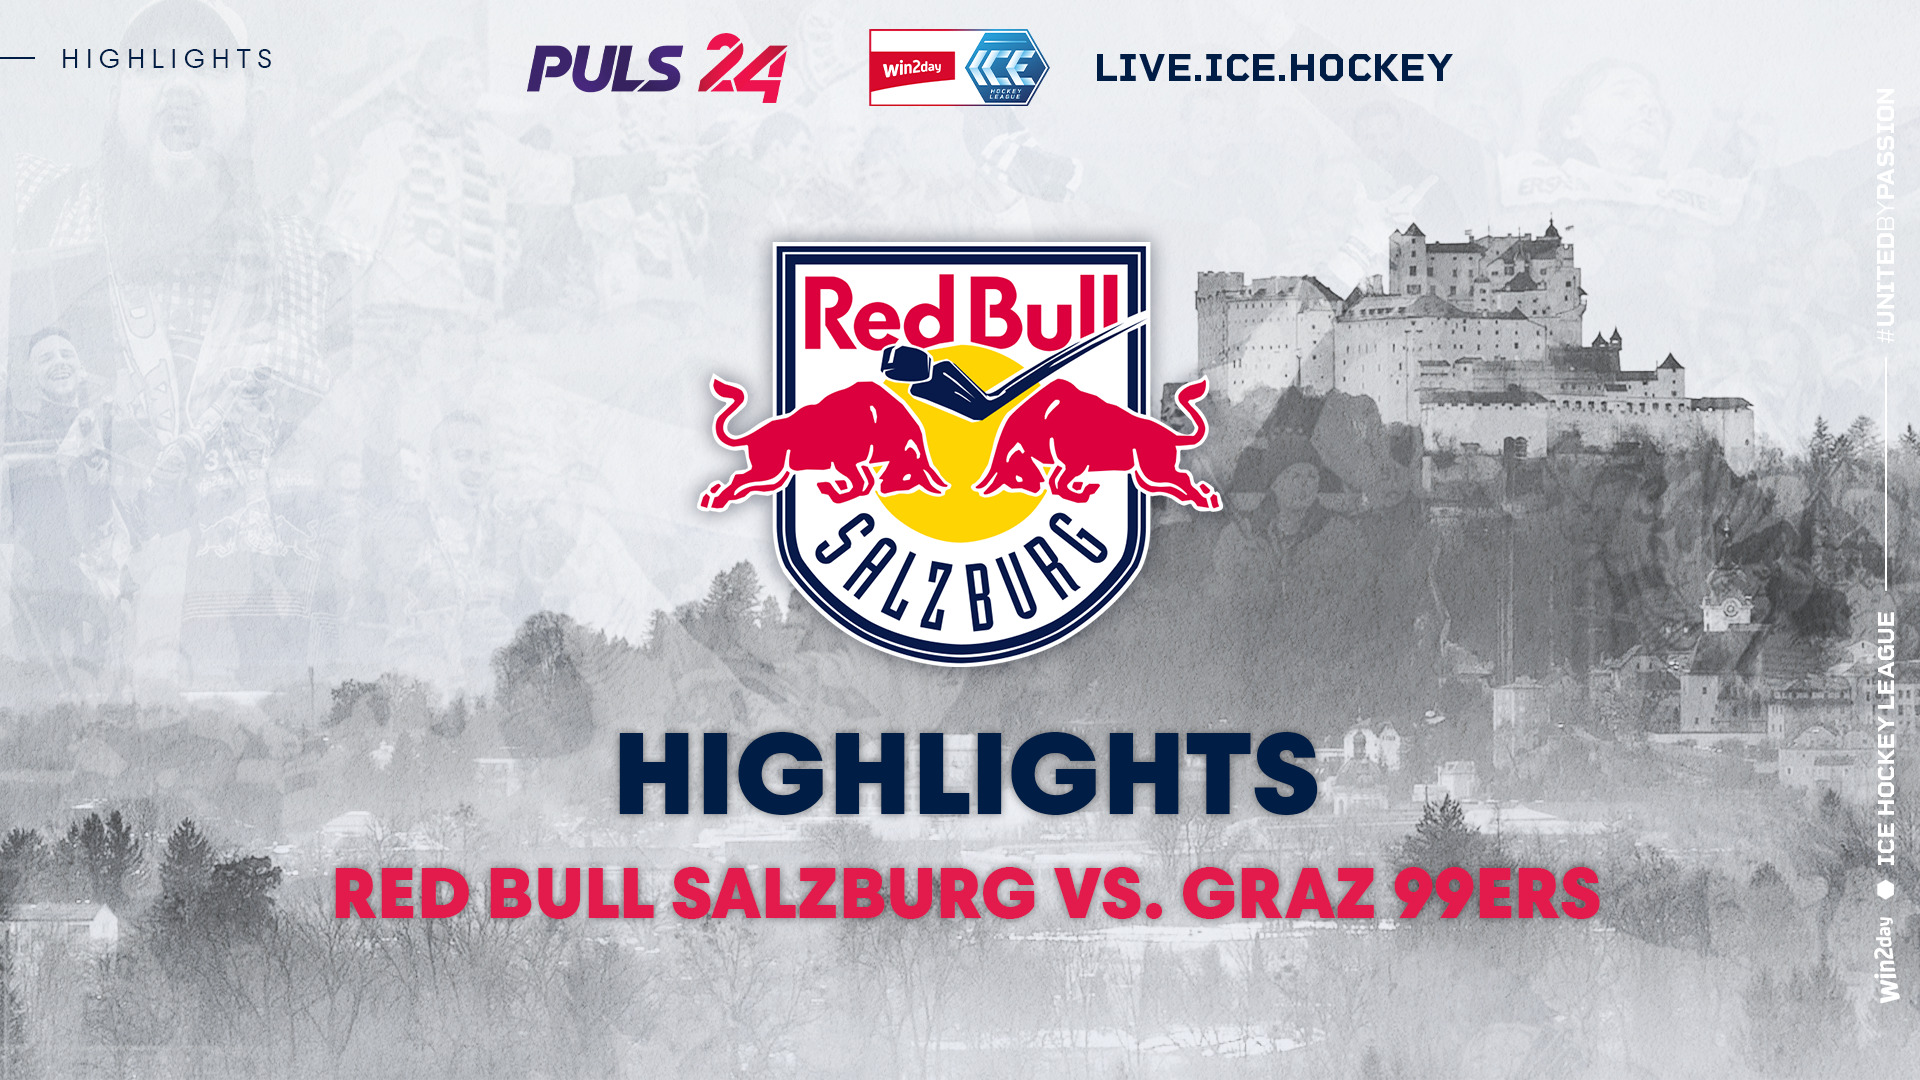 Highlights: EC Red Bull Salzburg vs. Graz 99ers